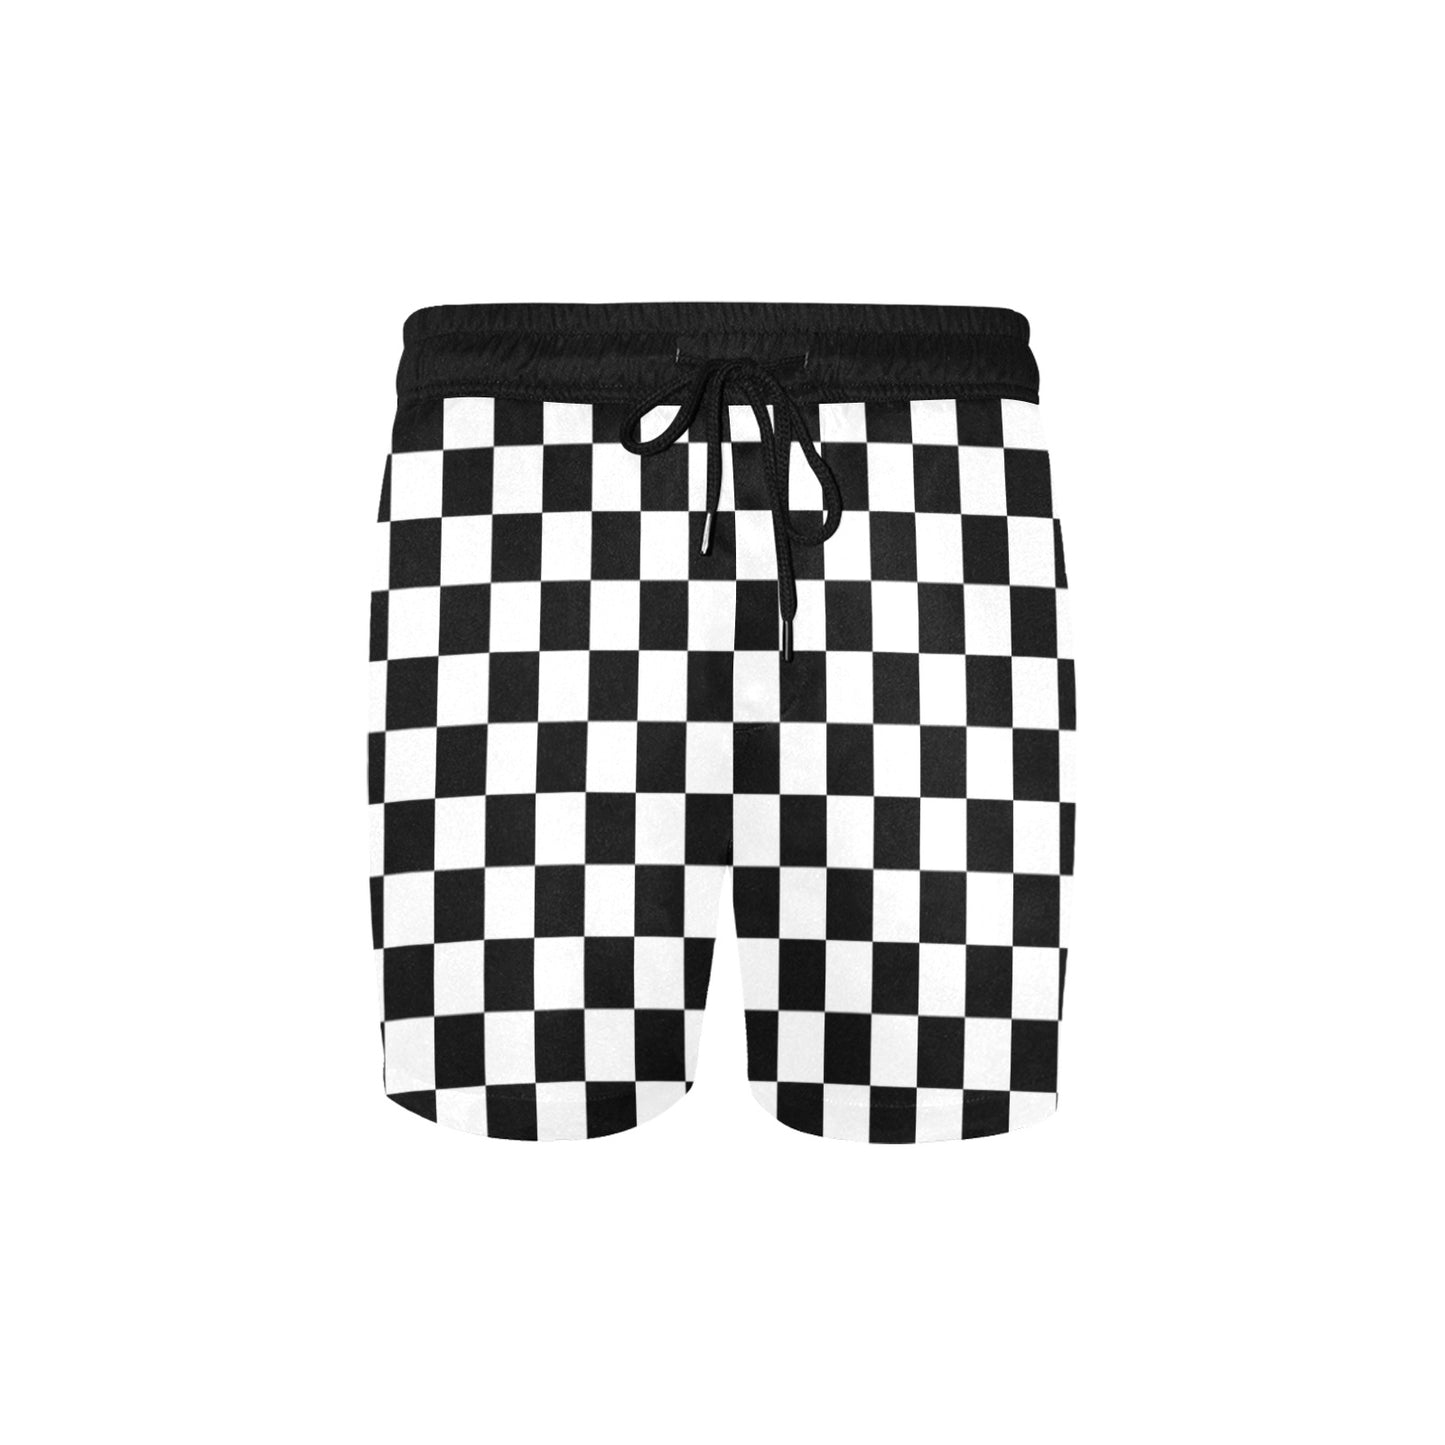 Checkered Men Mid Length Shorts, Black White Check Beach Swim Trunks with Pockets & Mesh Drawstring Boys Casual Bathing Suit Summer